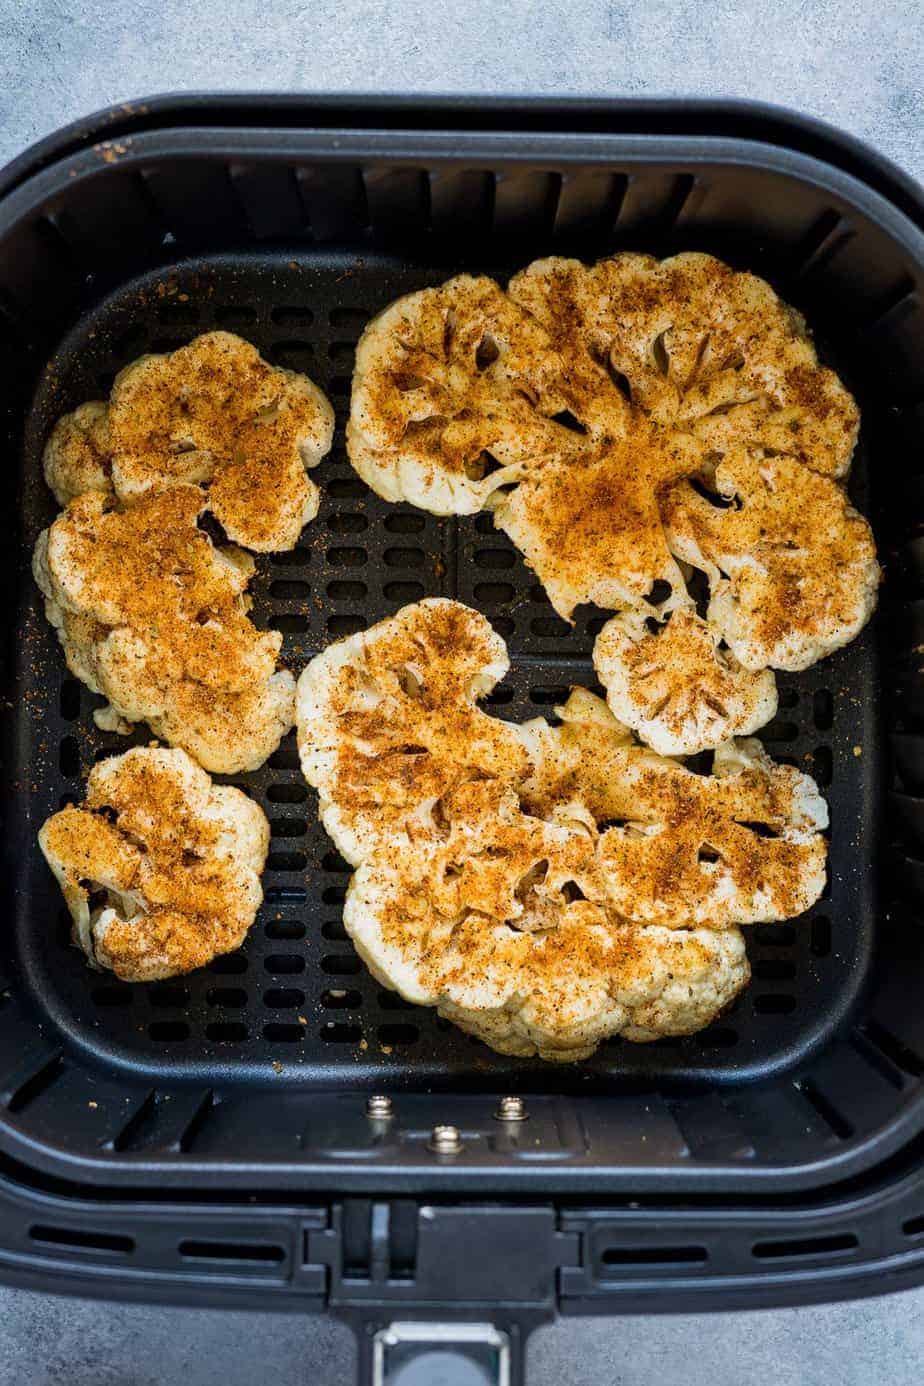 Season cauliflower steaks inside the air fryer basket